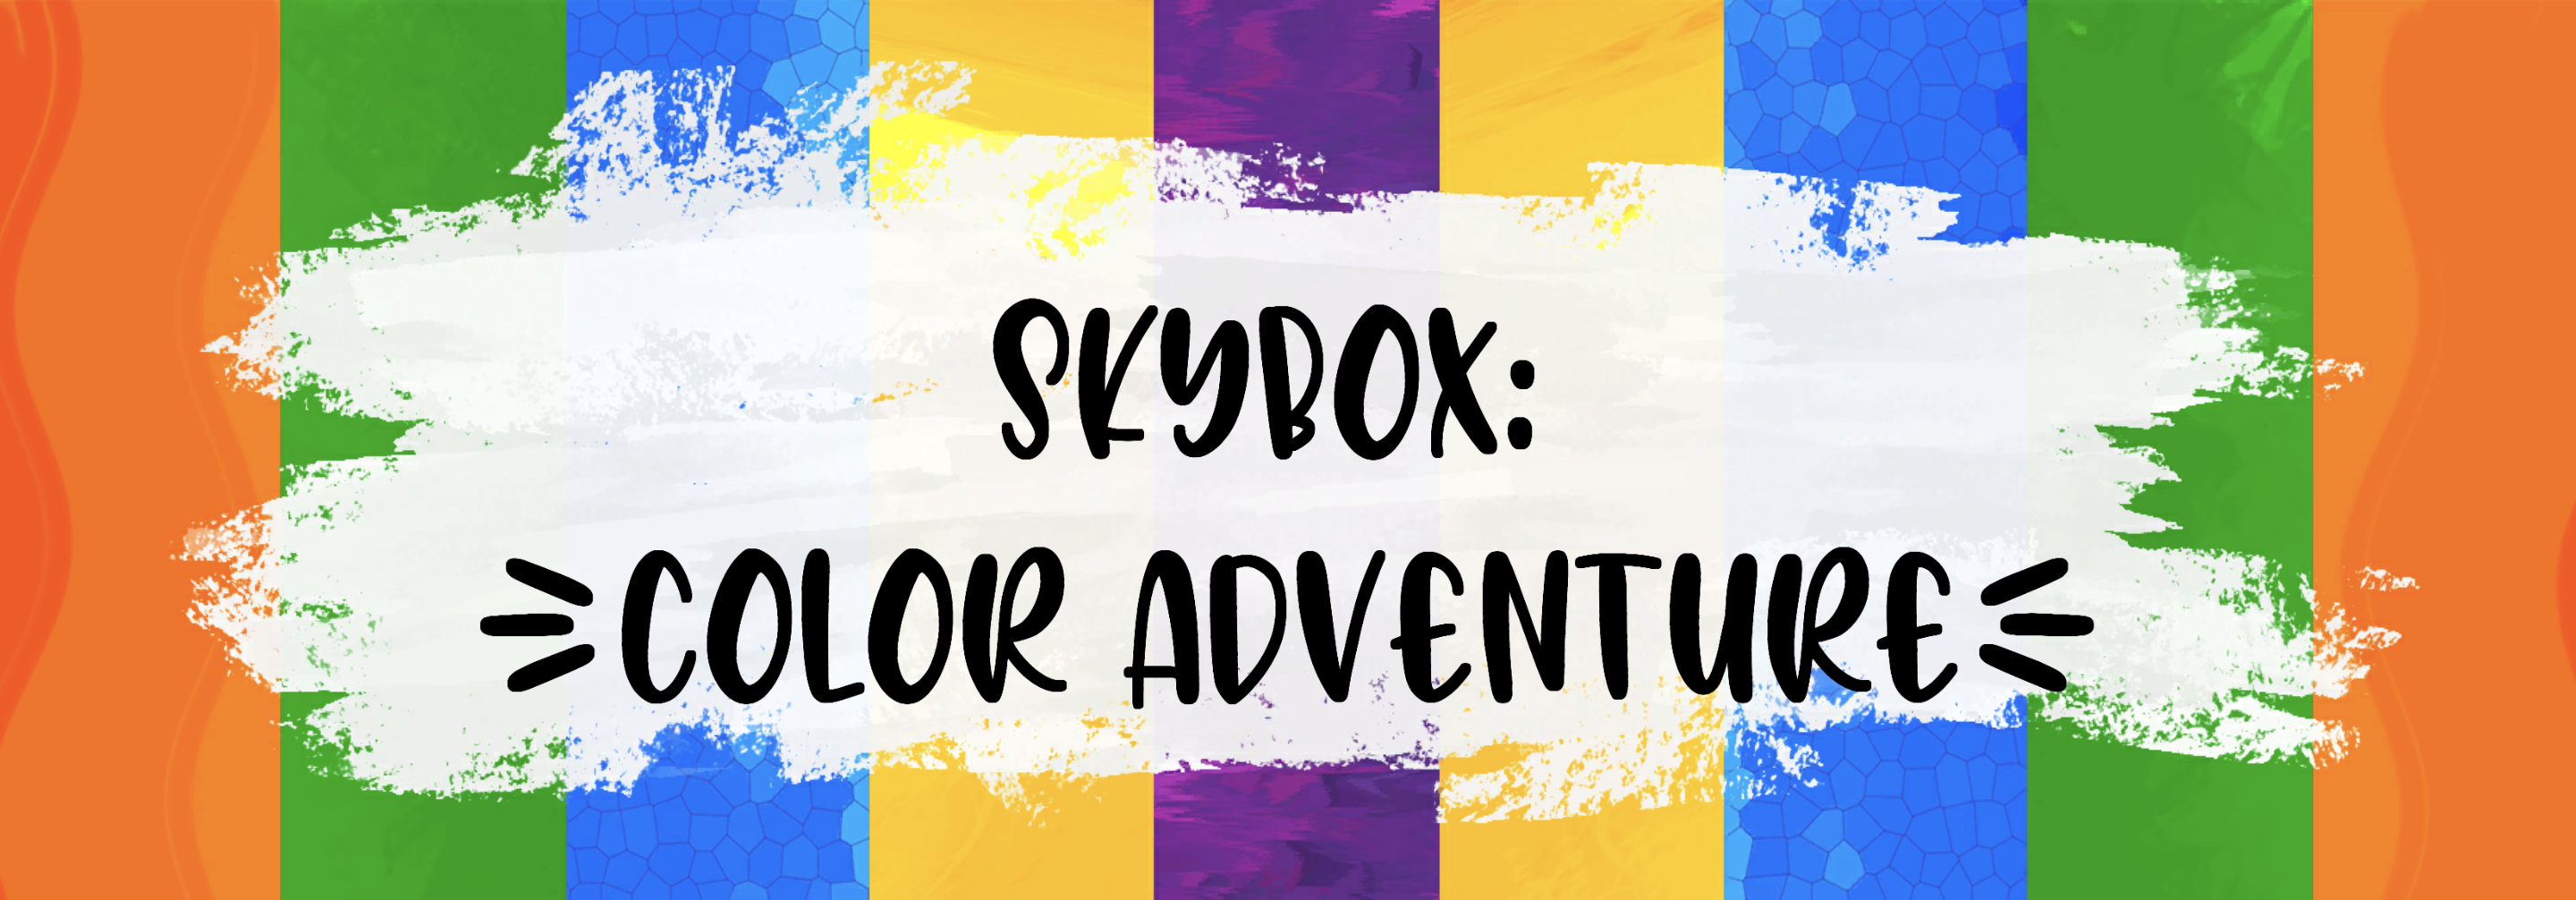 Skybox: Color Adventure